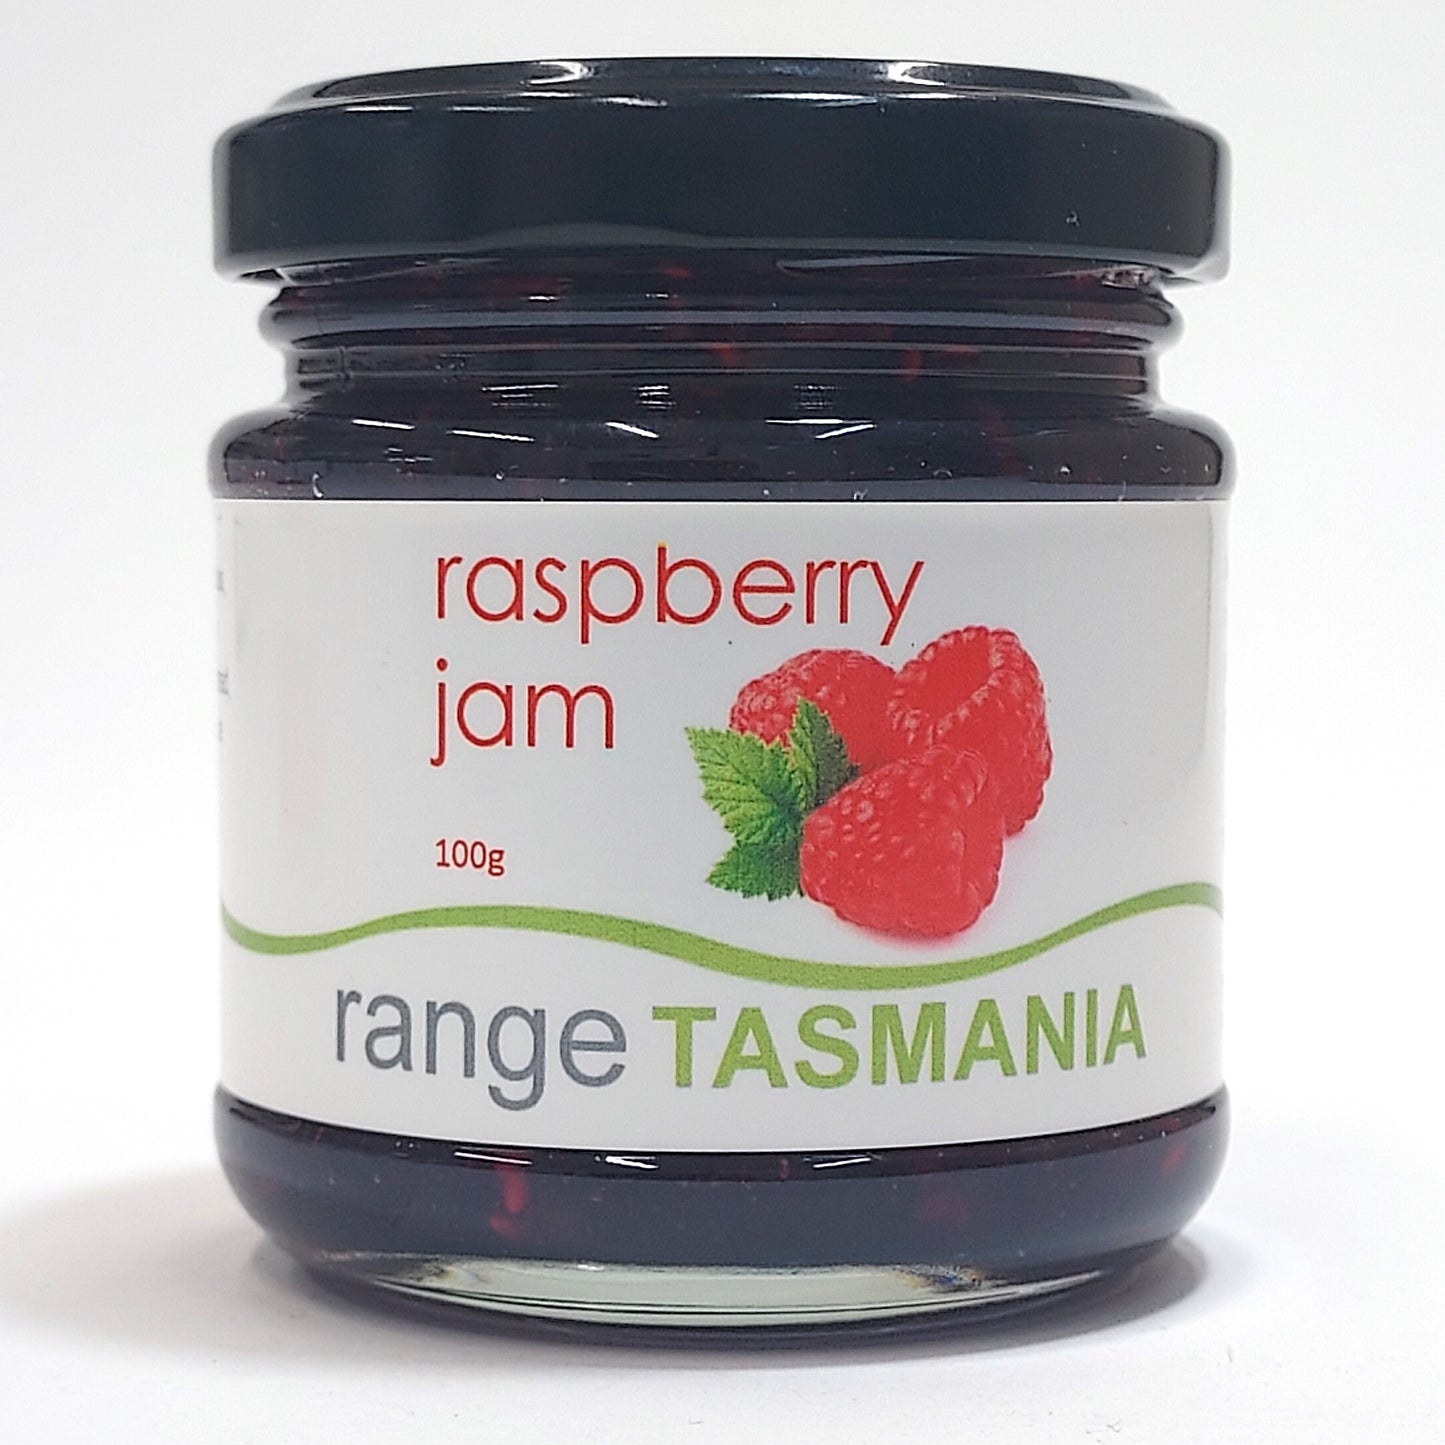 a 100 gram jar of raspberry jam